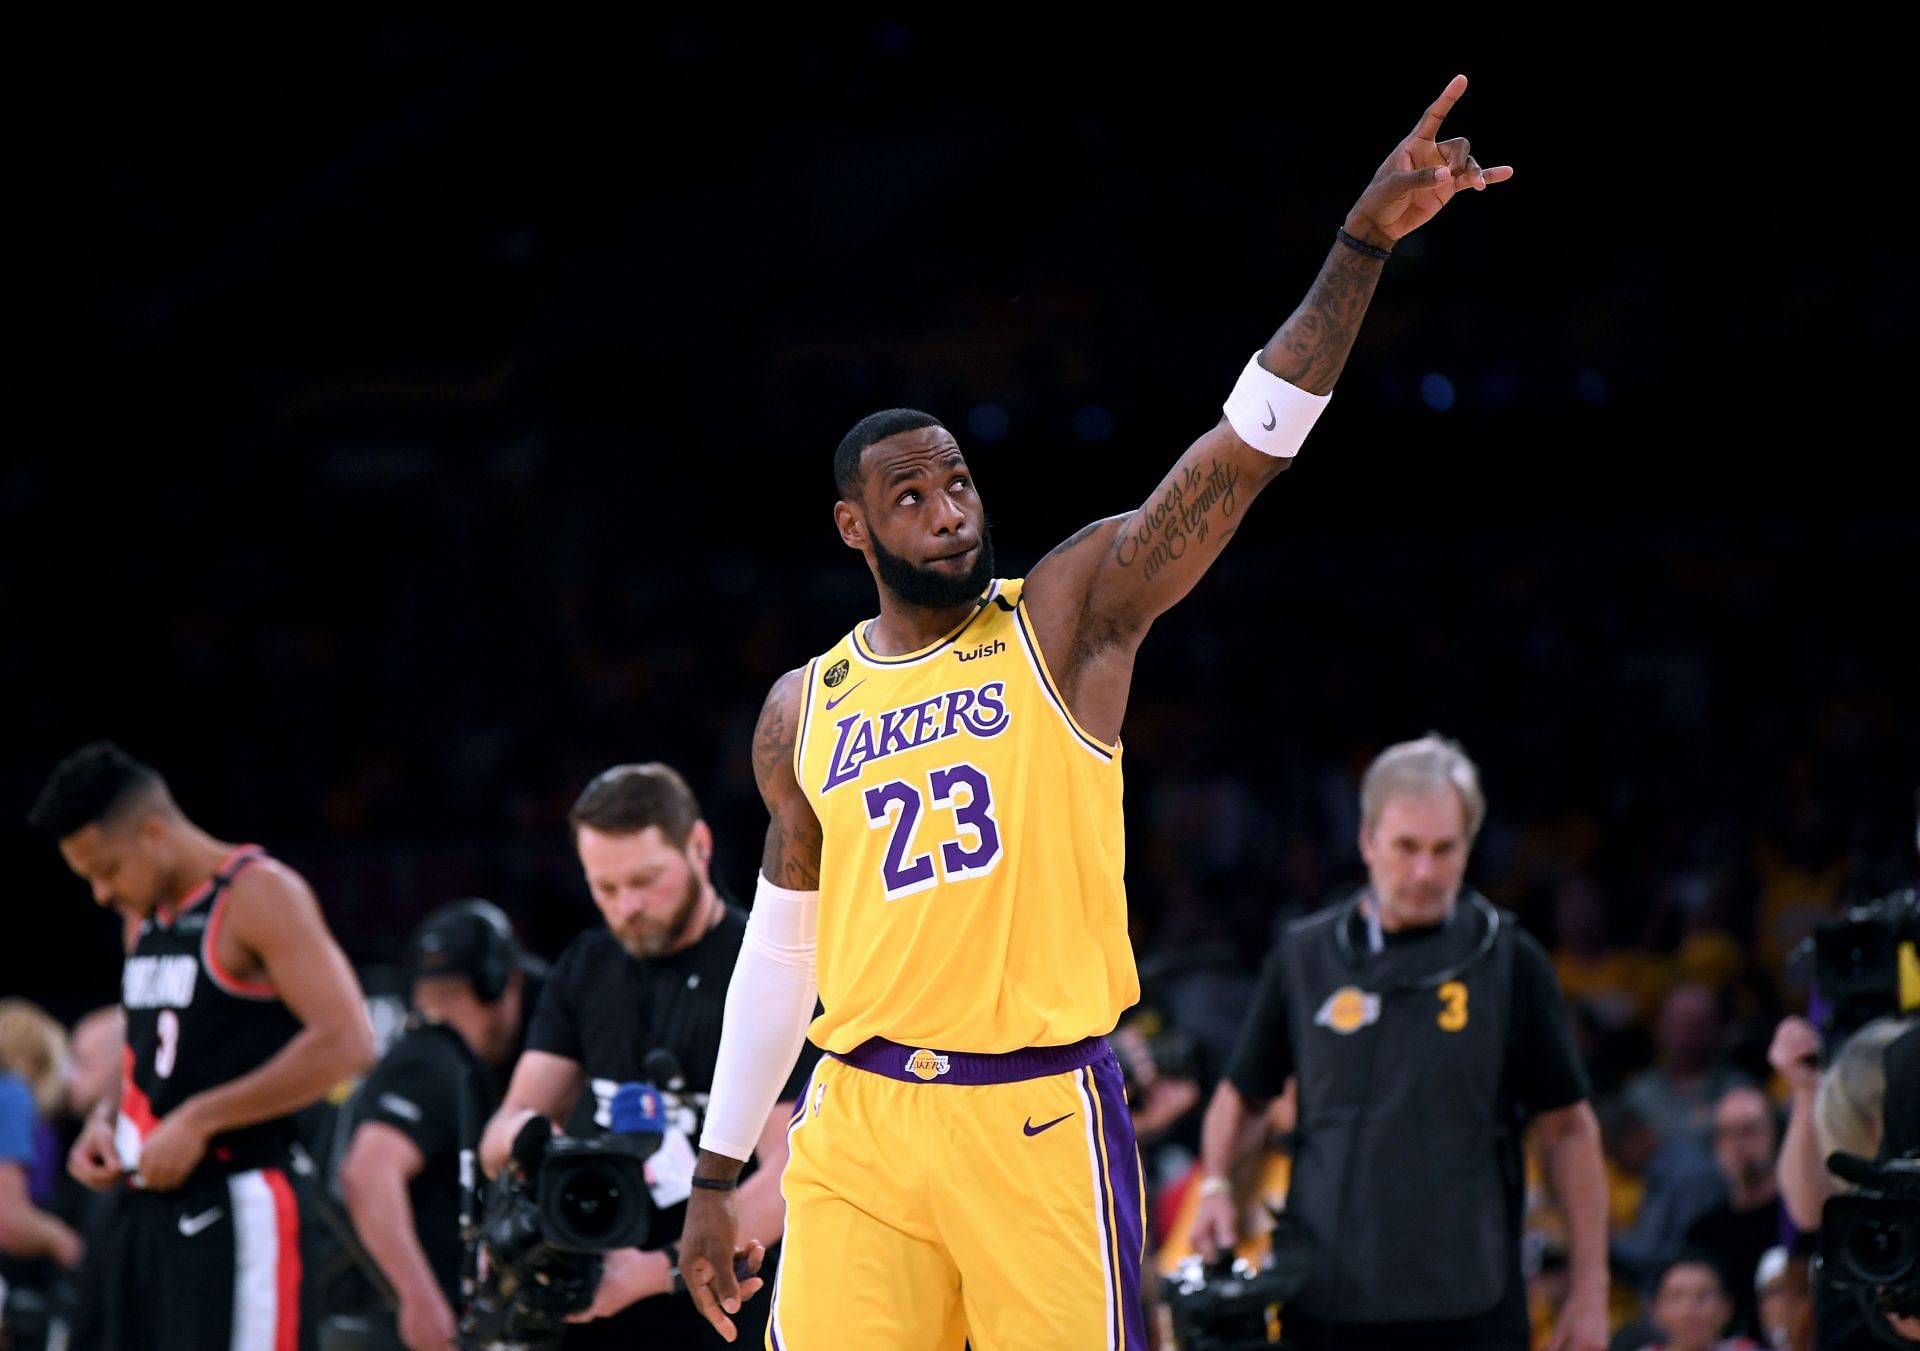 LA Lakers superstar forward LeBron James paid respect to Muhammad Ali.